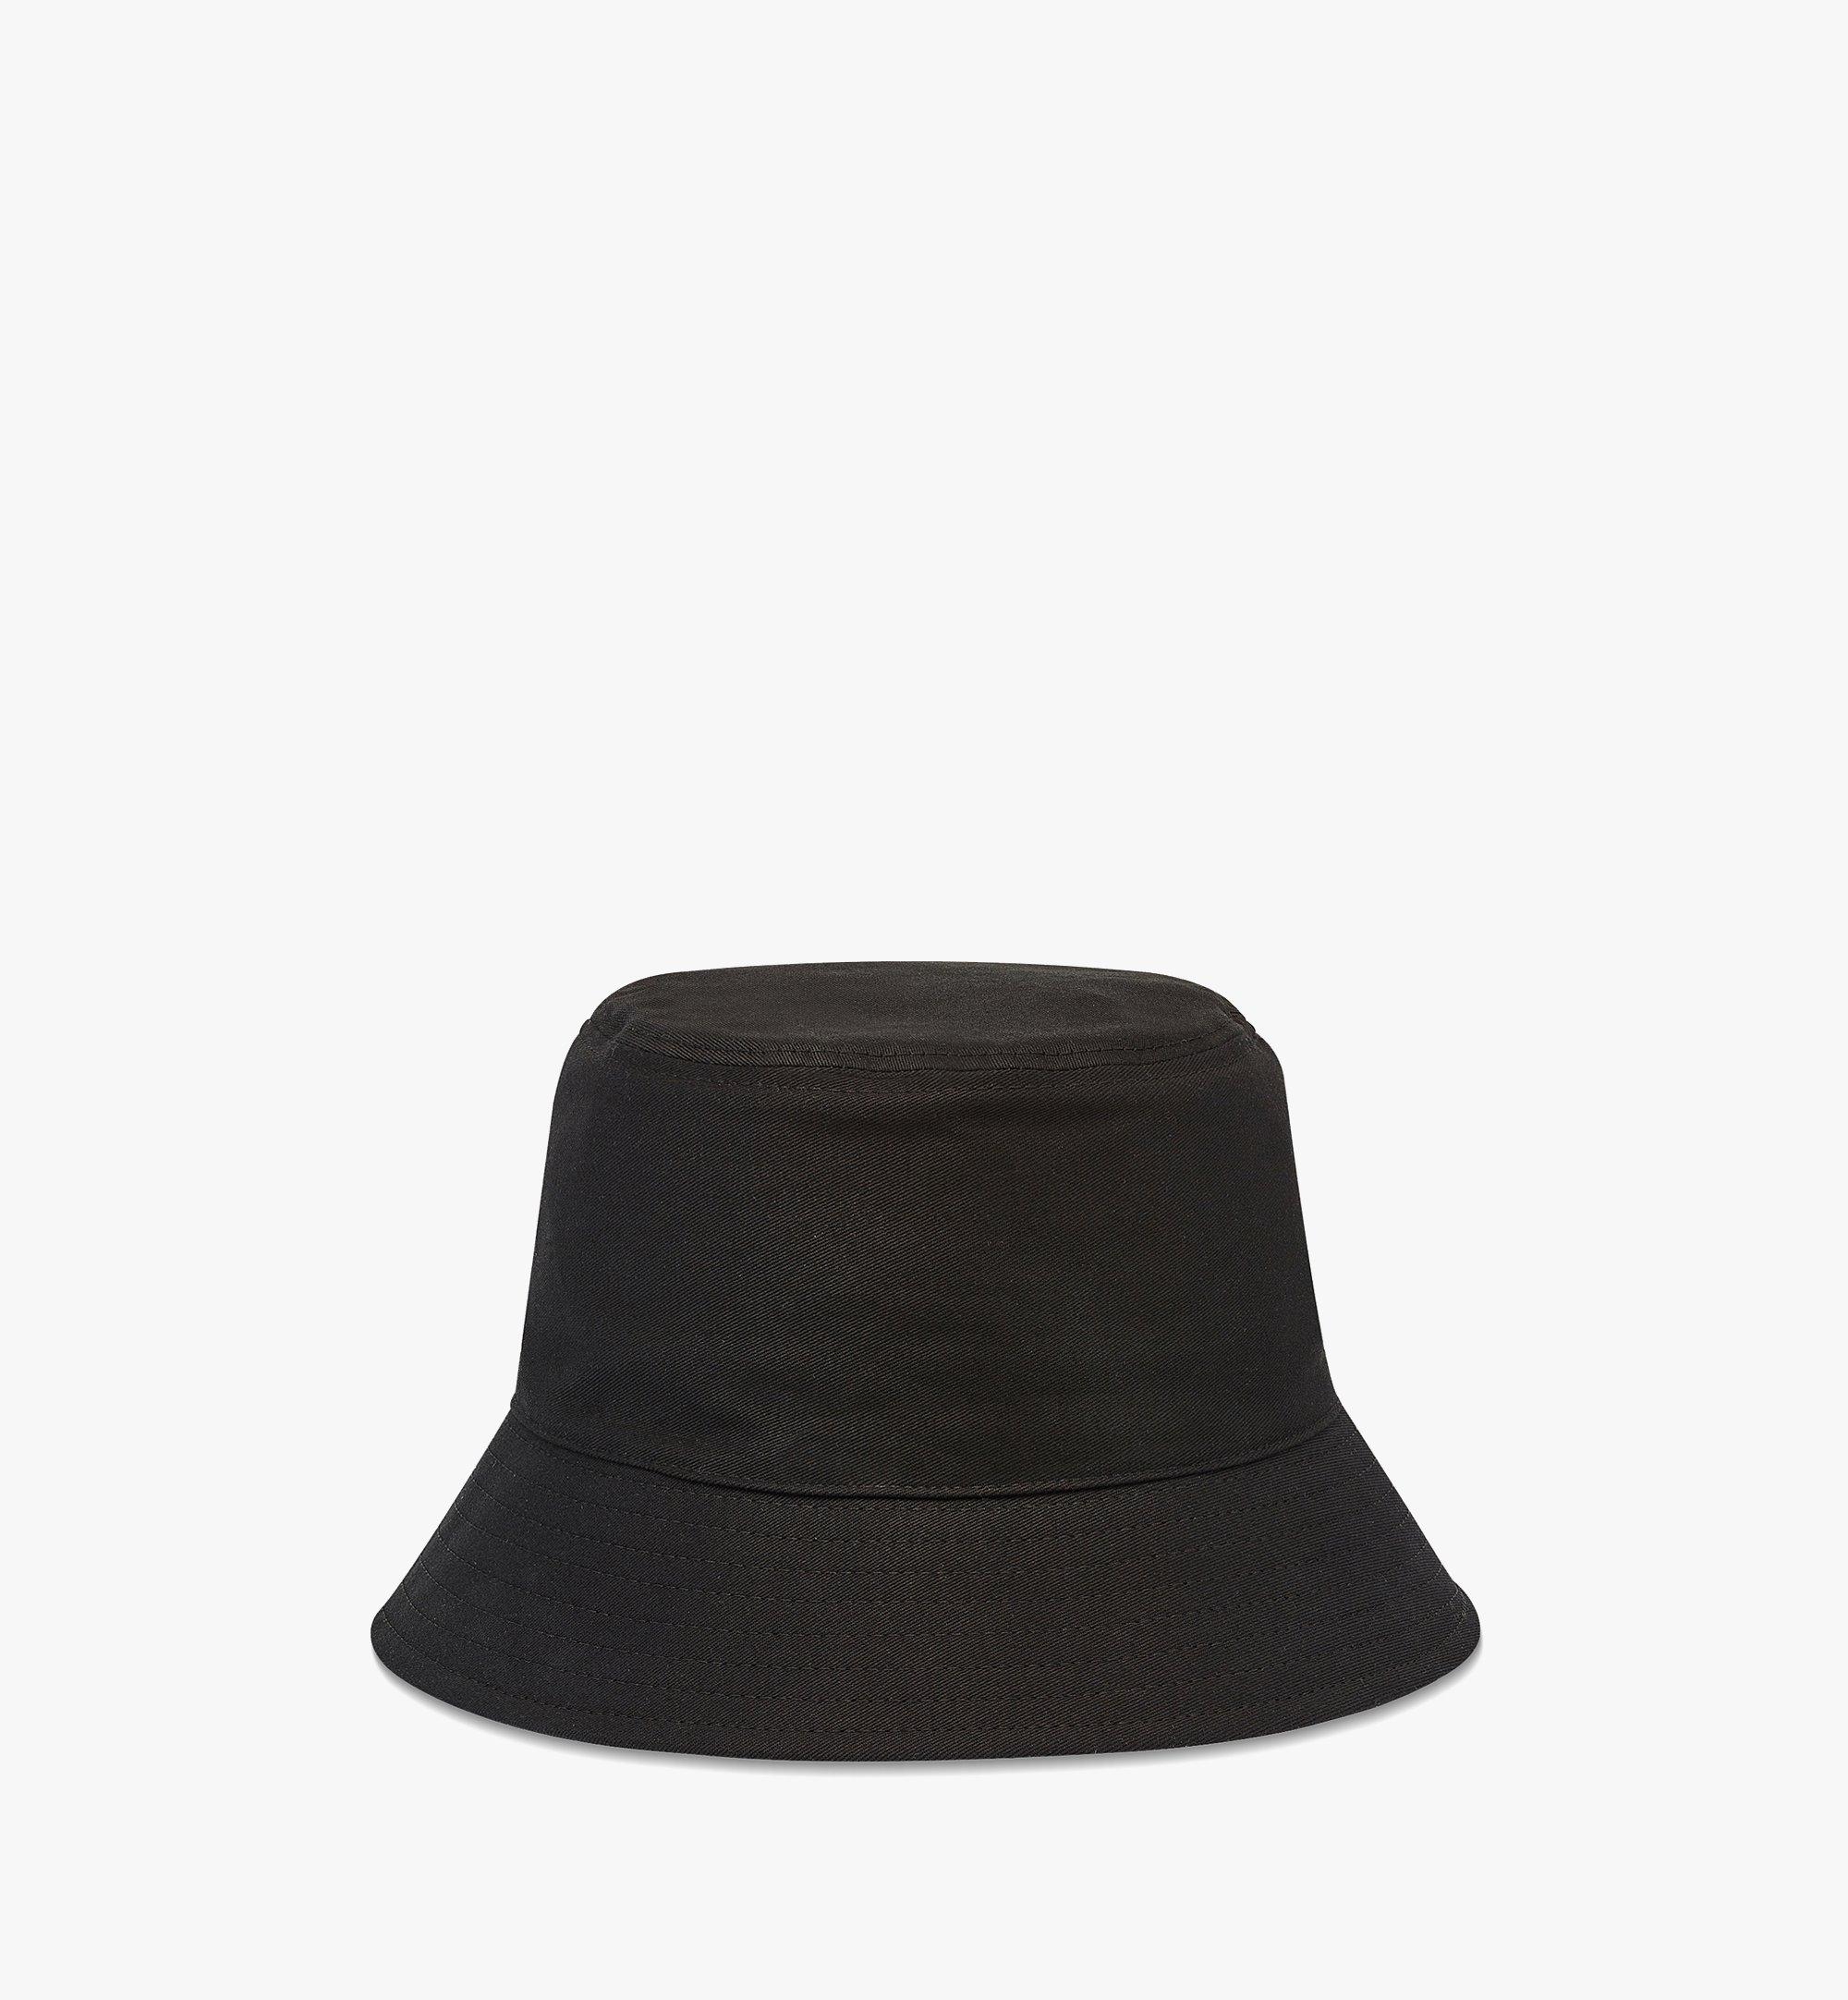 MCM MCM Essentials Bucket Hat in Cotton Twill Black MEHCSBC02BK001 Alternate View 1